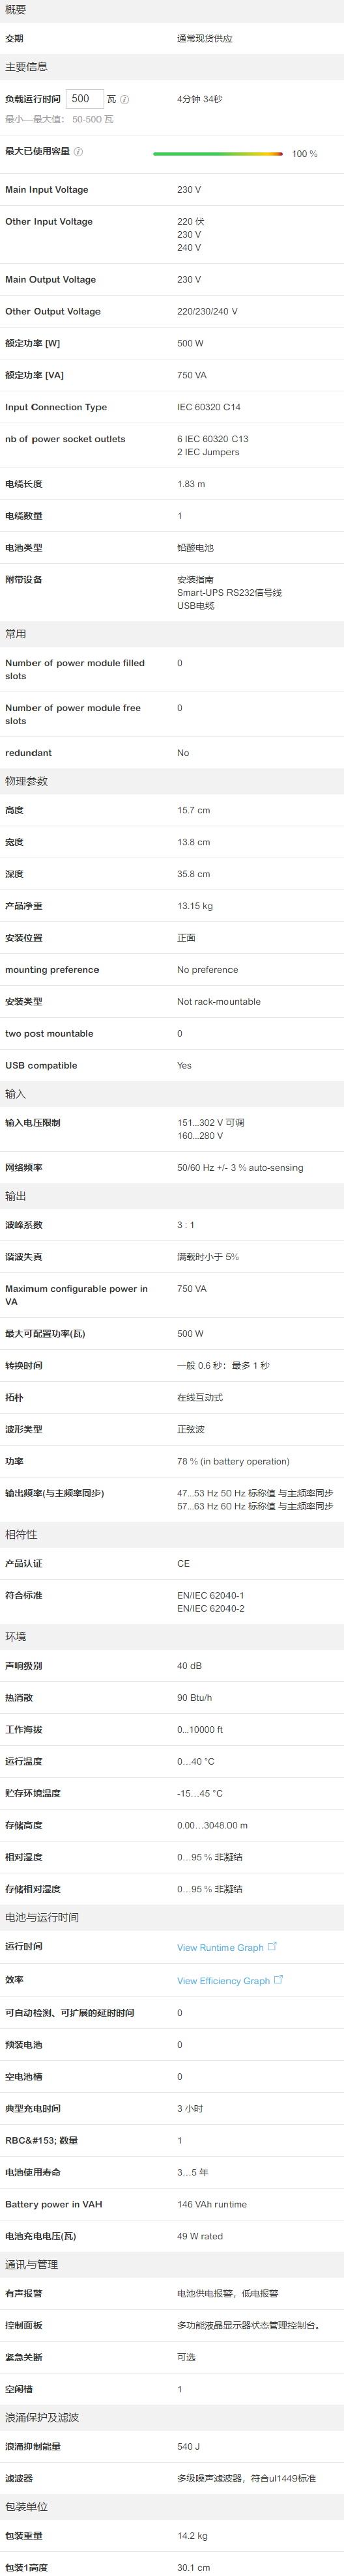 SMT750I-CH _ APC China.png